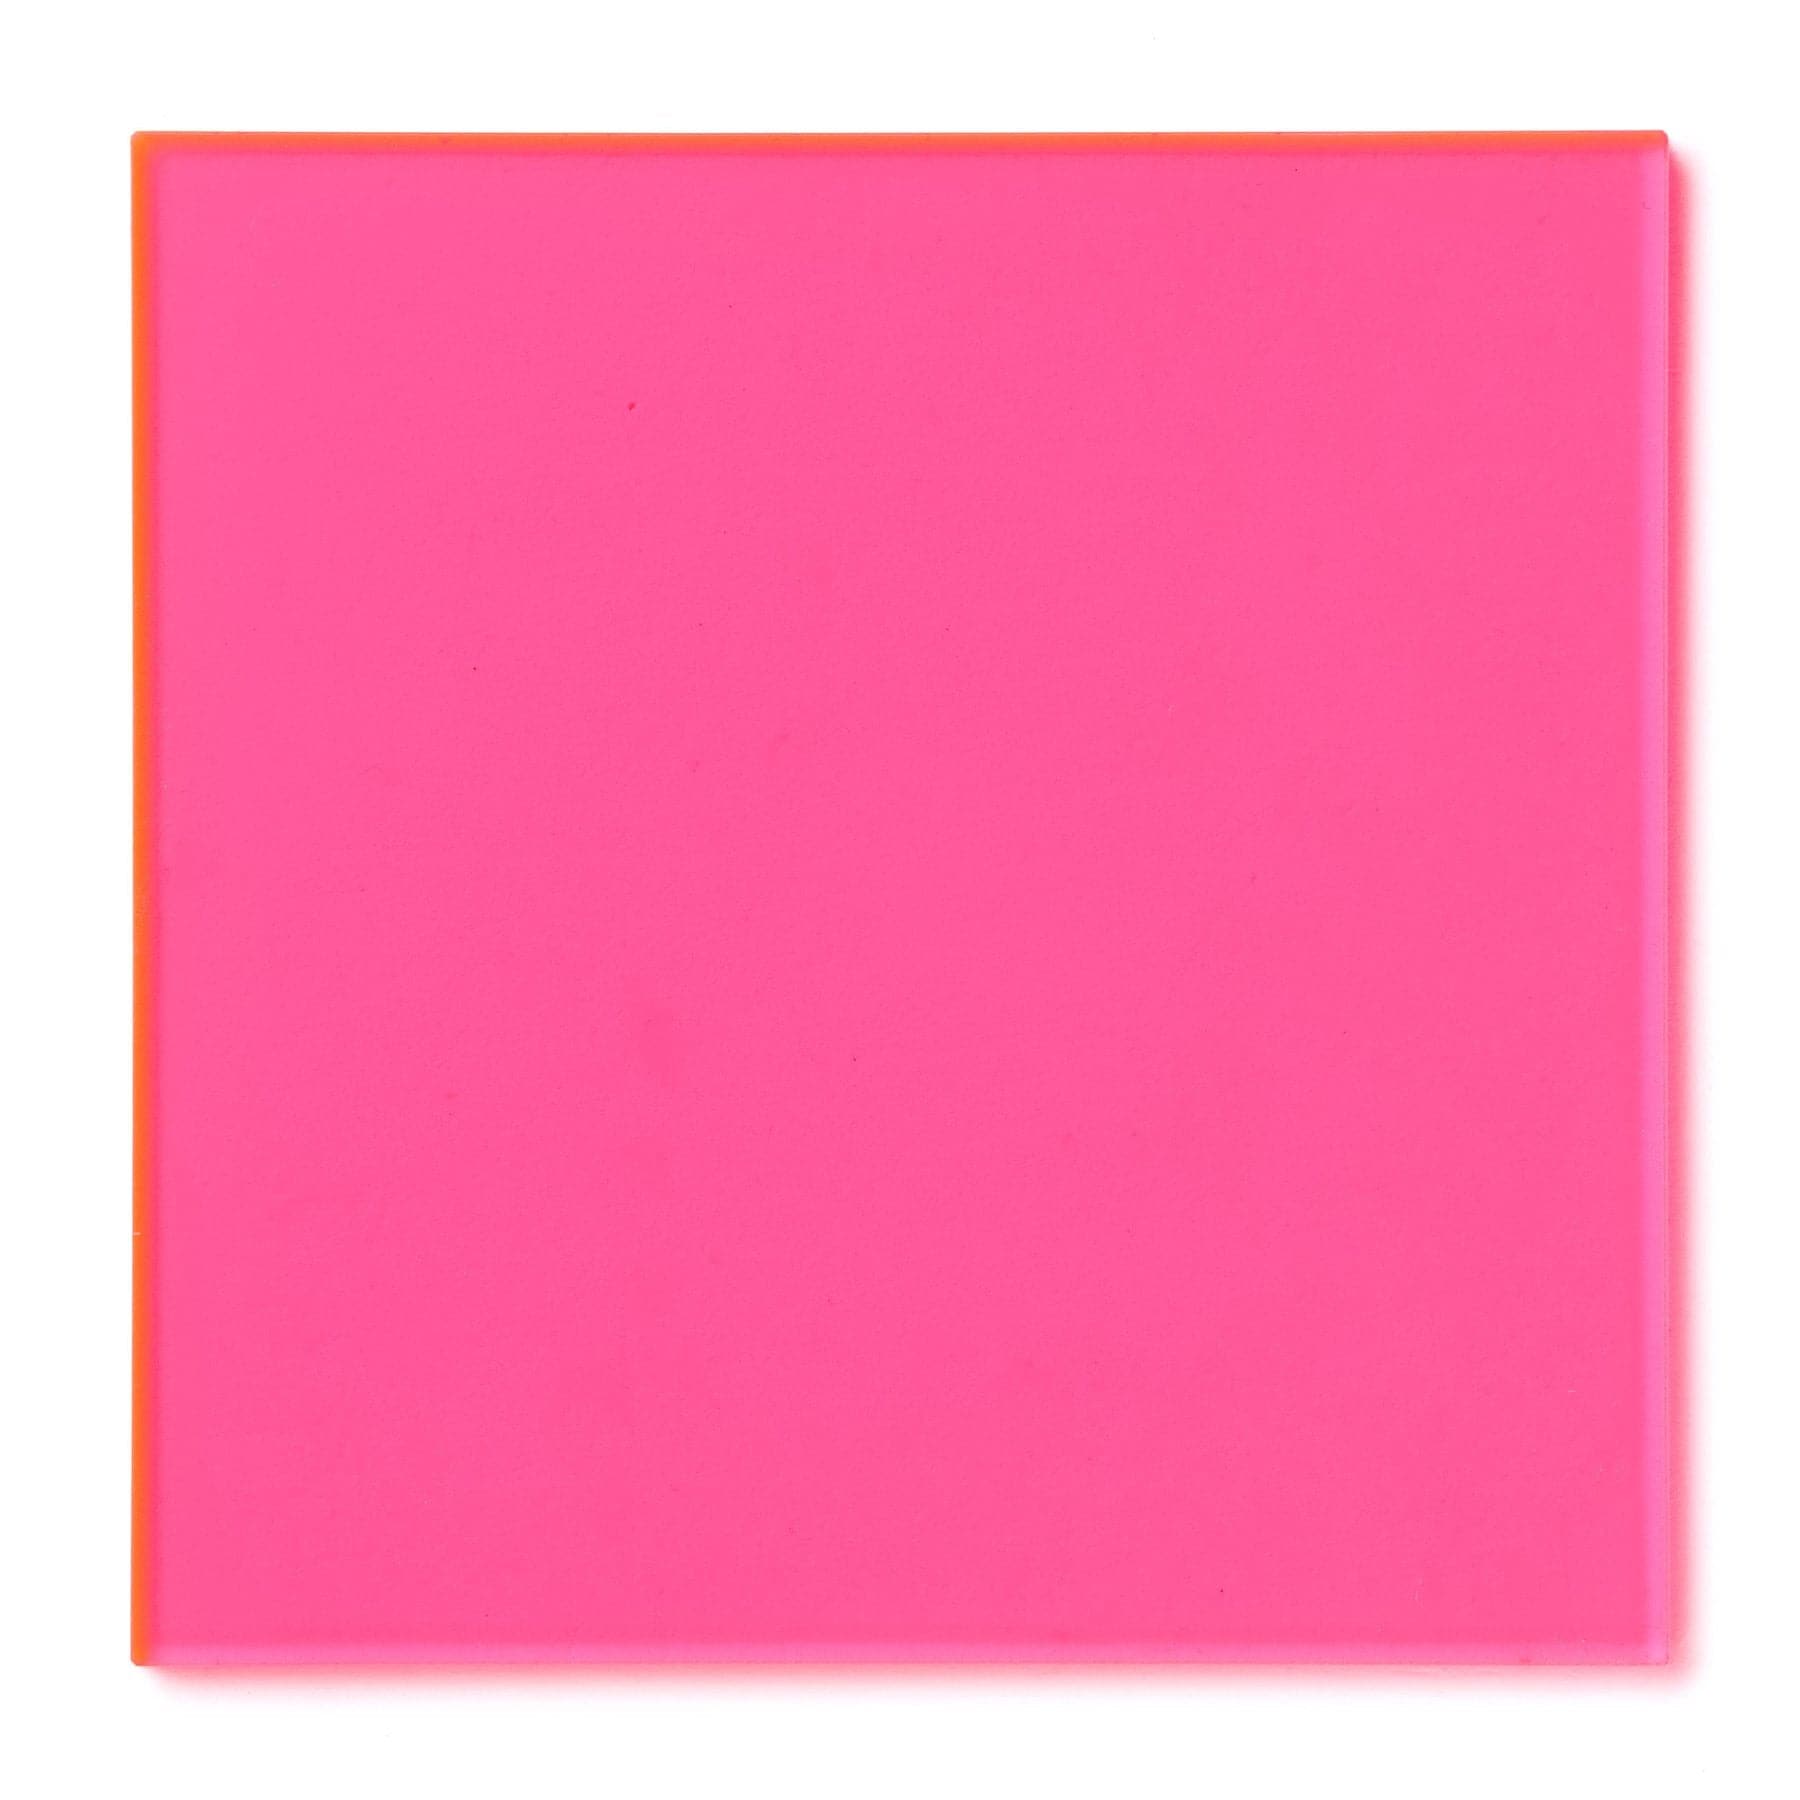 Hoja acrílica fluorescente rosa #9095 de 1/8"